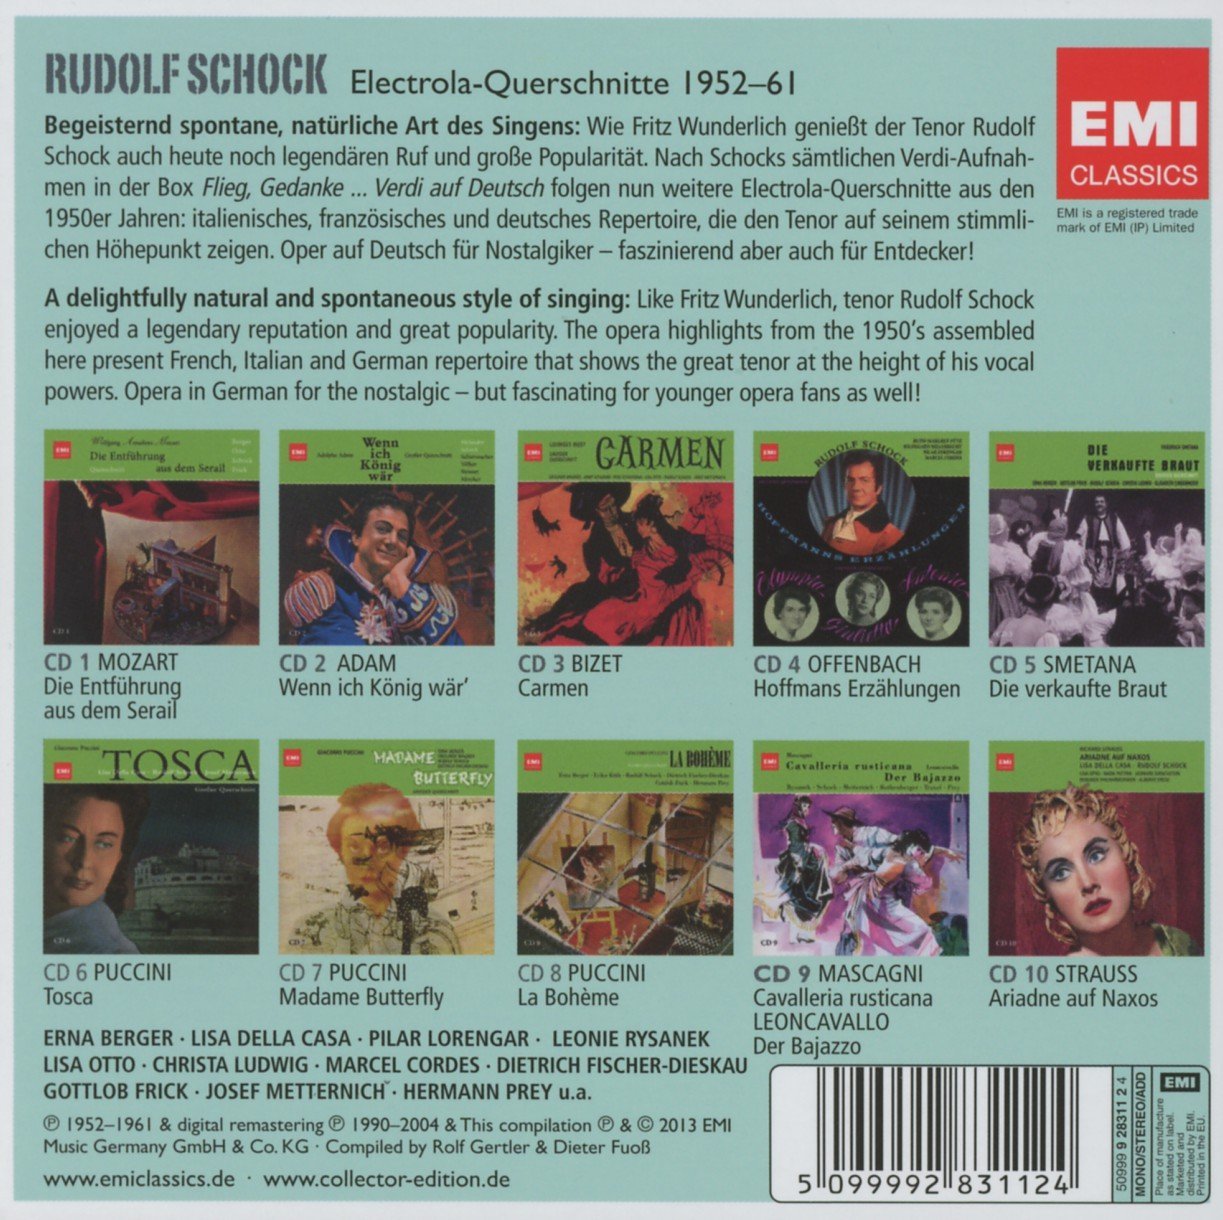 Rudolf Schock on EMI new release 10 CD box-set